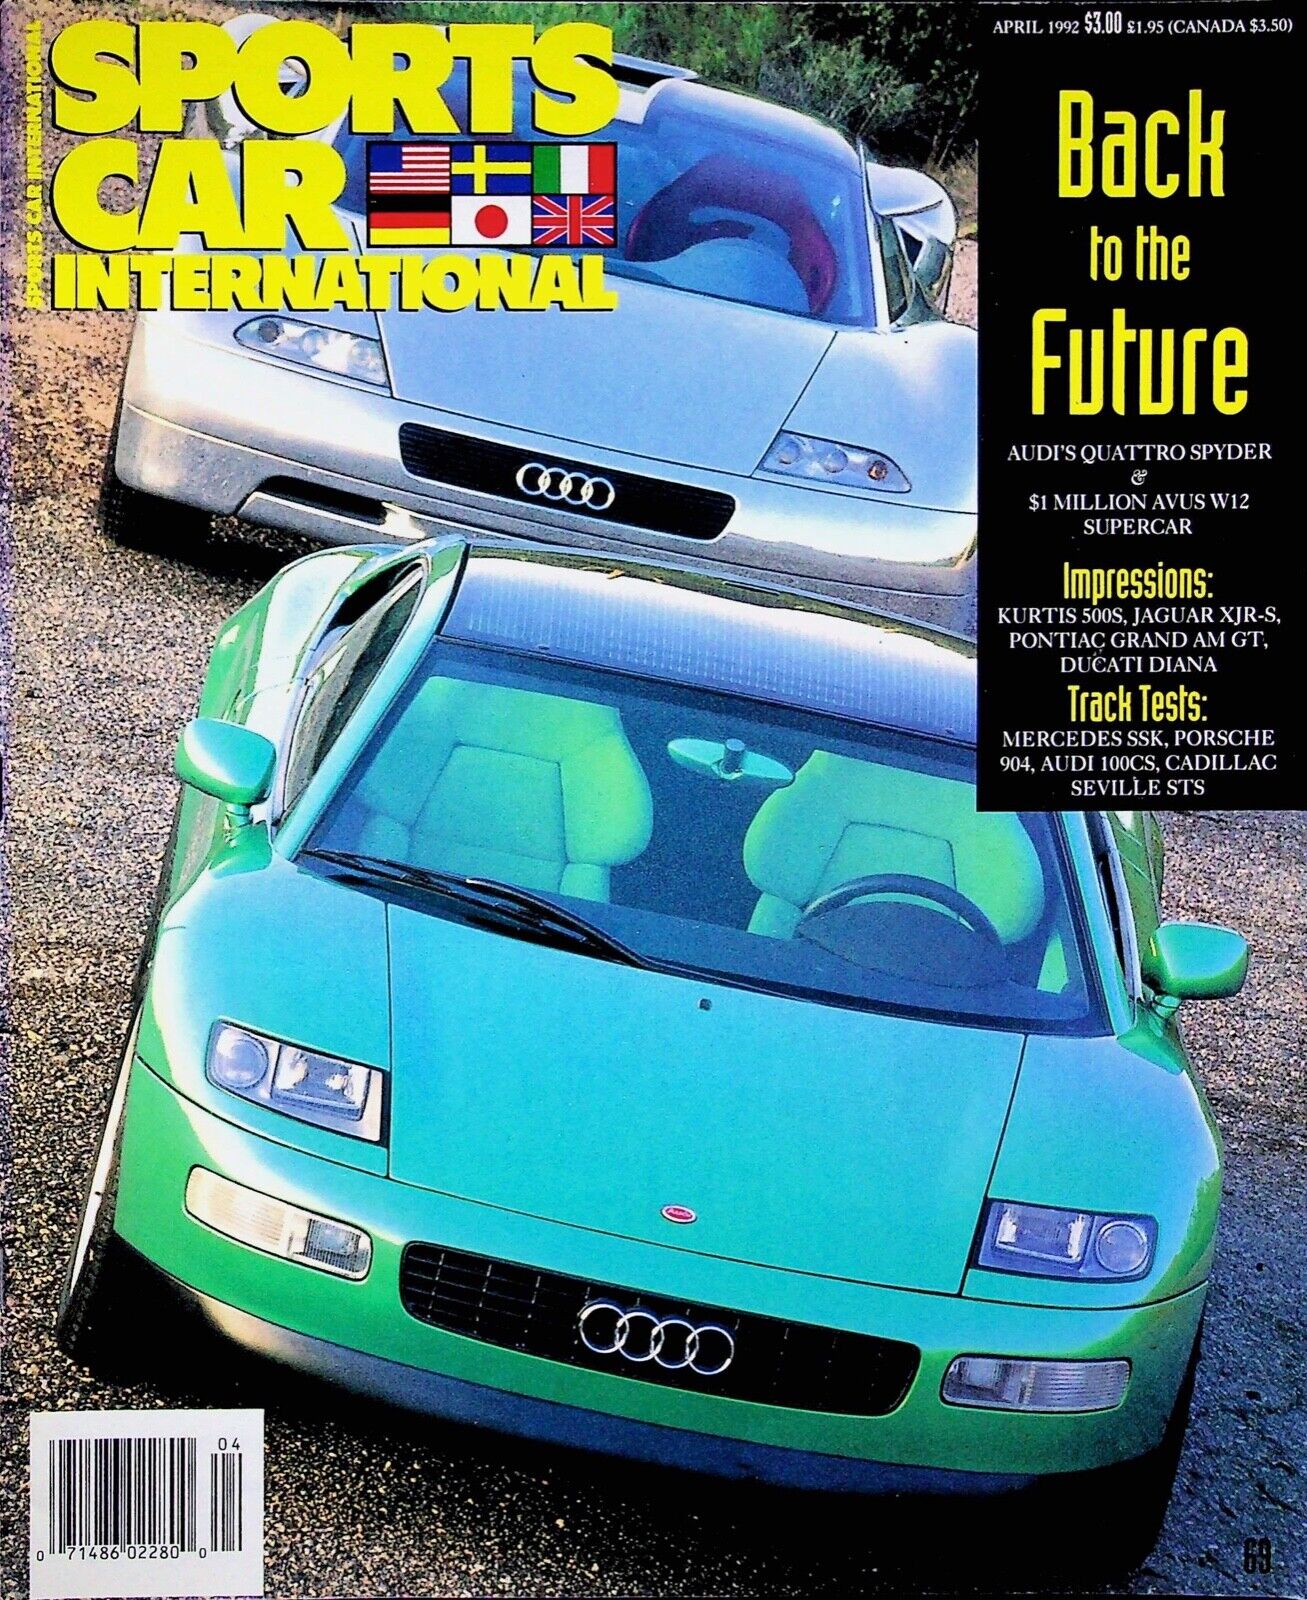 VINTAGE BACK TO THE FUTURE - SPORTS CAR INTERNATIONAL, APRIL 1992